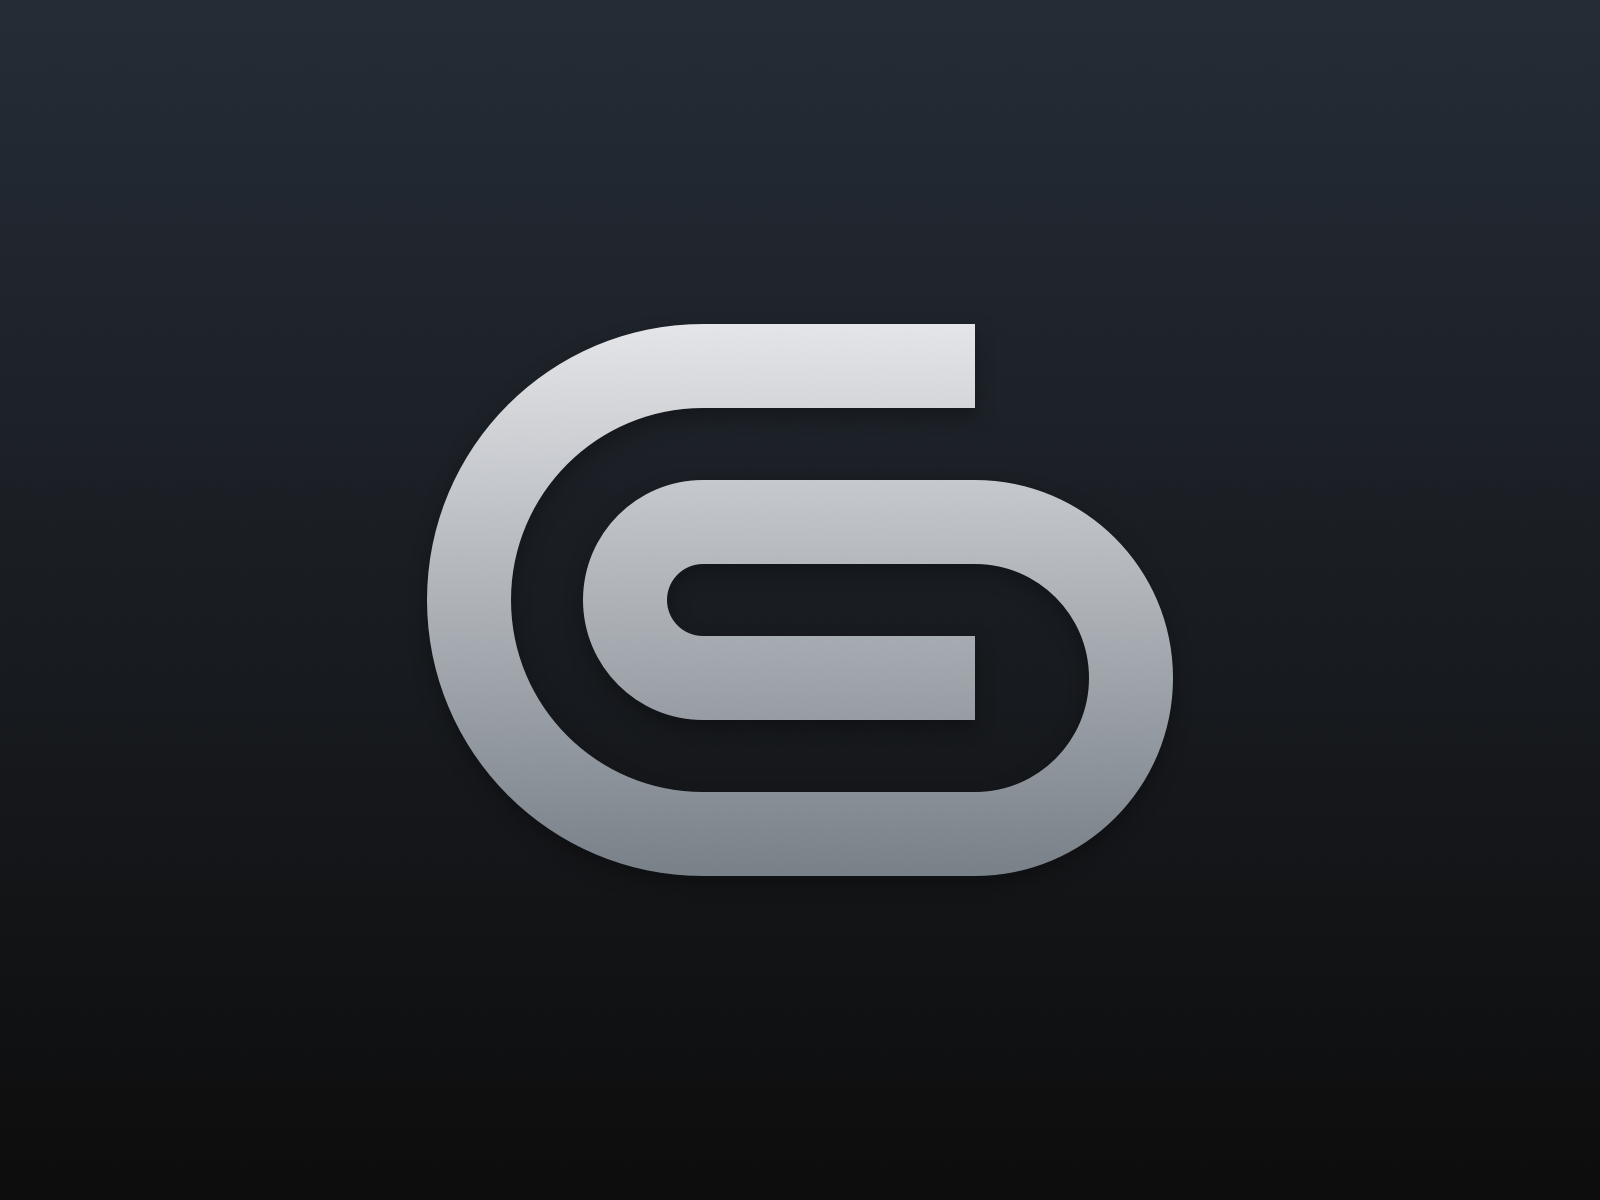 Svg g. Эмблема g. Эд лого. Дизайн буквы g. Красивый логотип g.